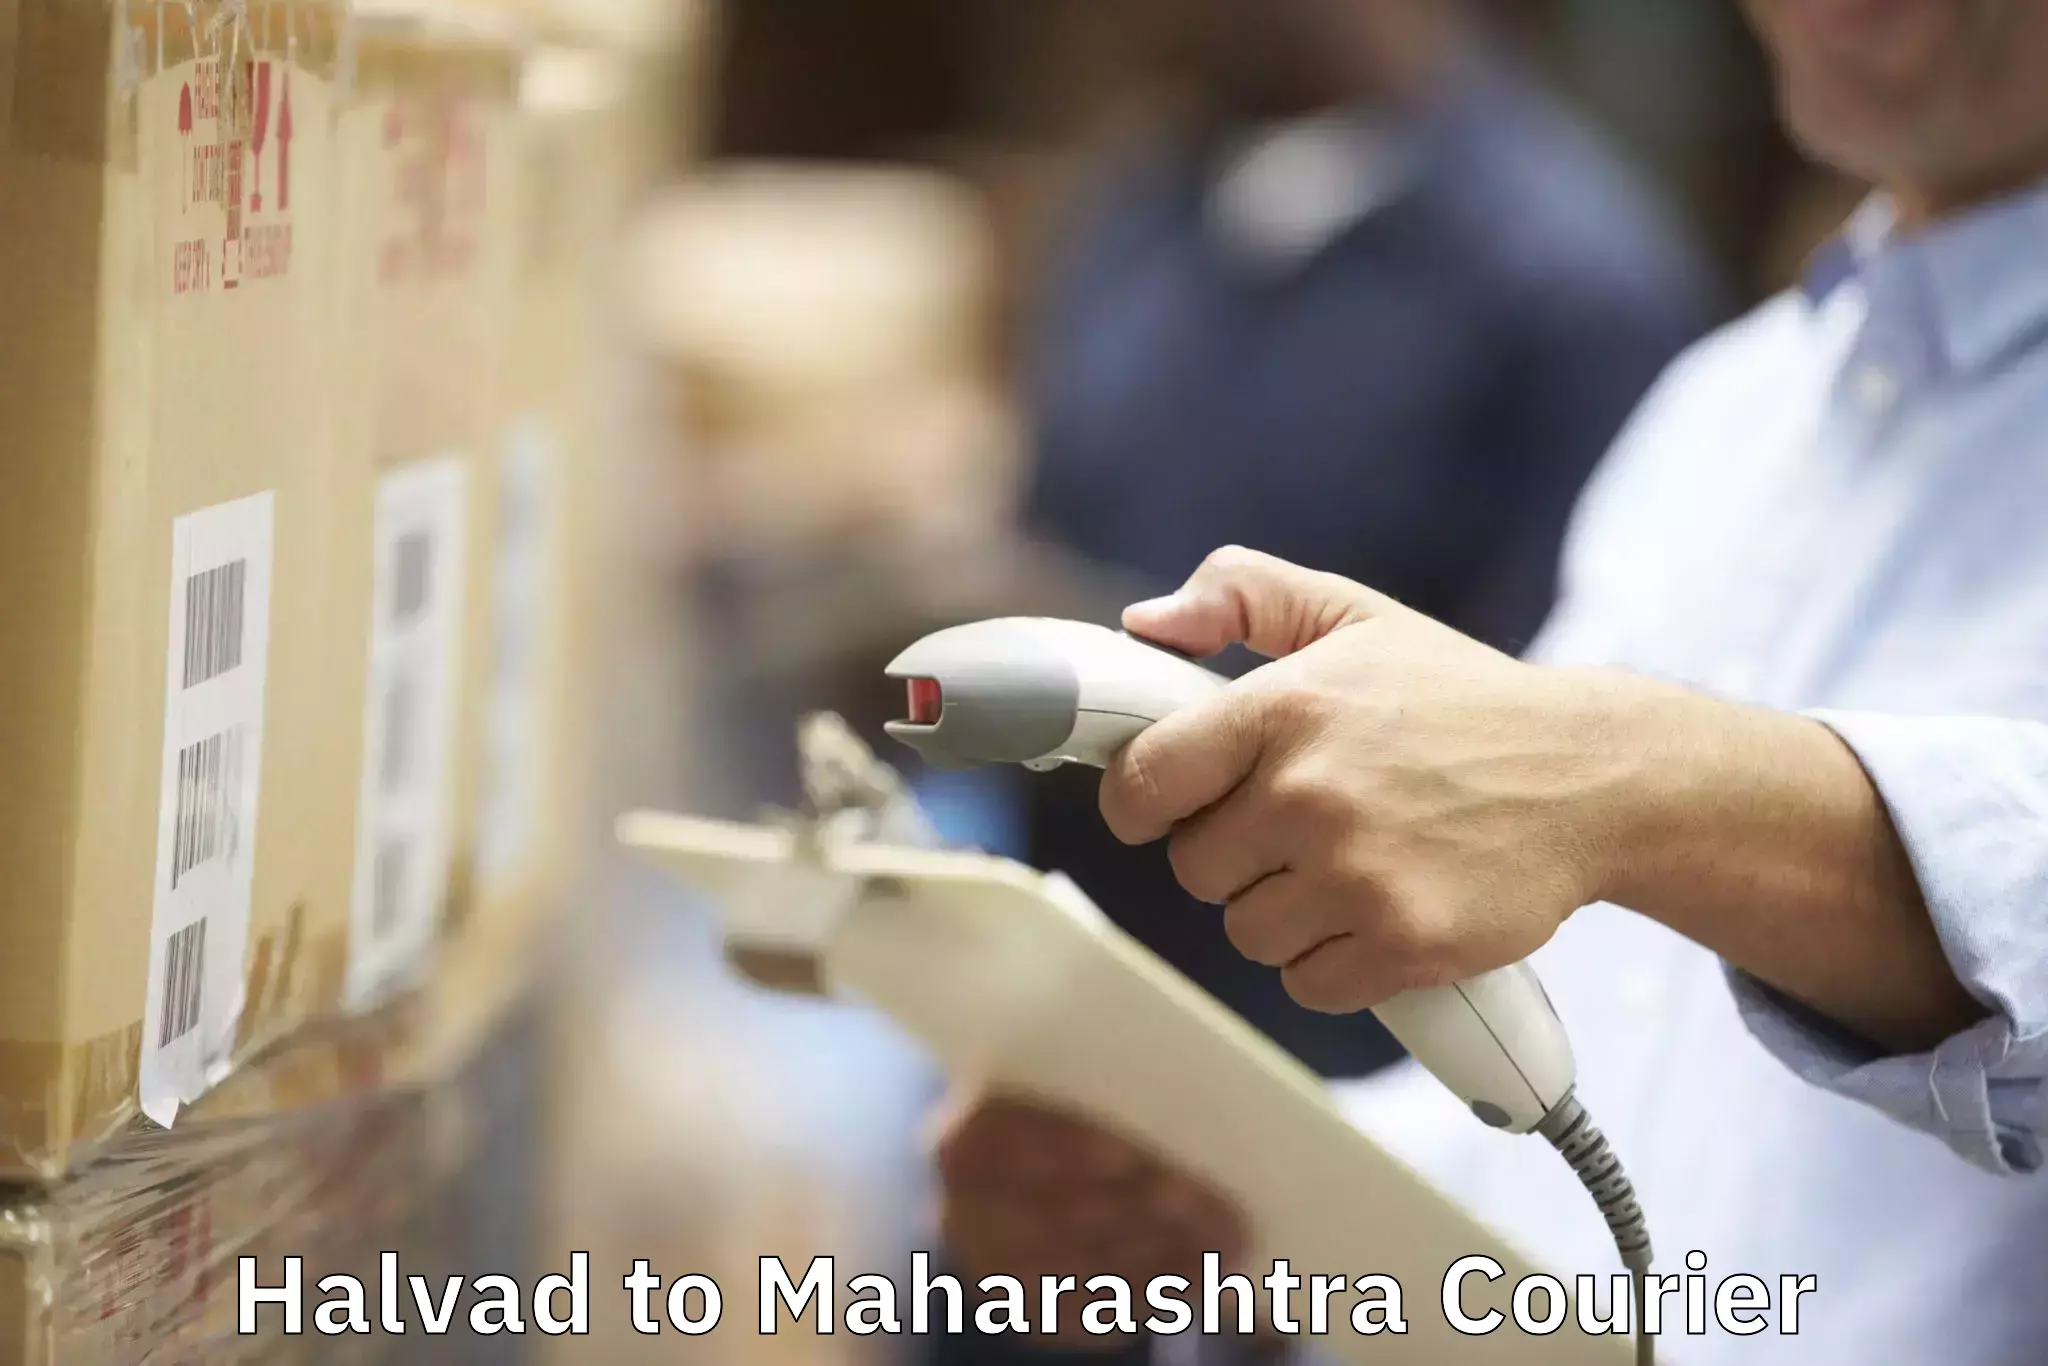 Furniture moving experts Halvad to Maharashtra